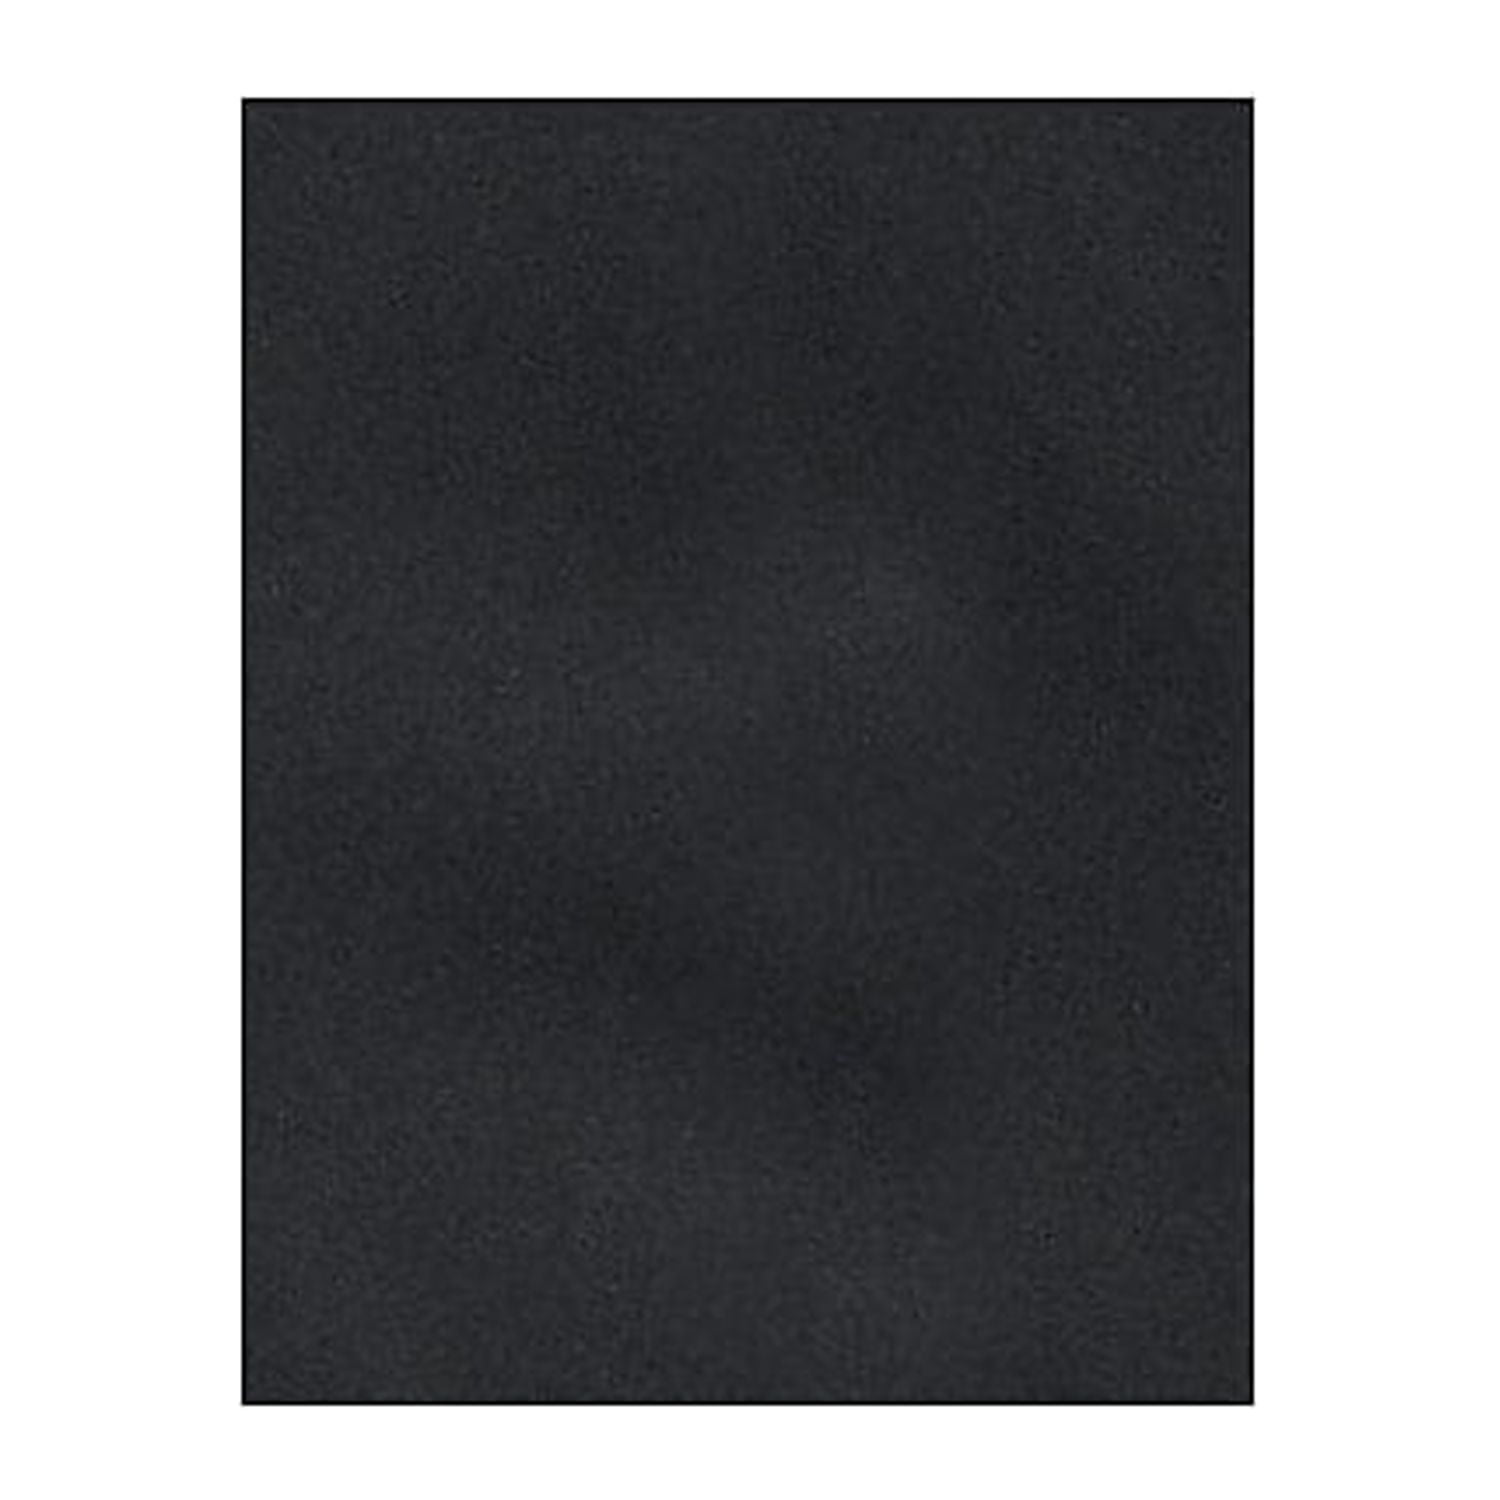 11 x 17 Color Paper Eclipse Black - Bulk and Wholesale - Fine Cardstock